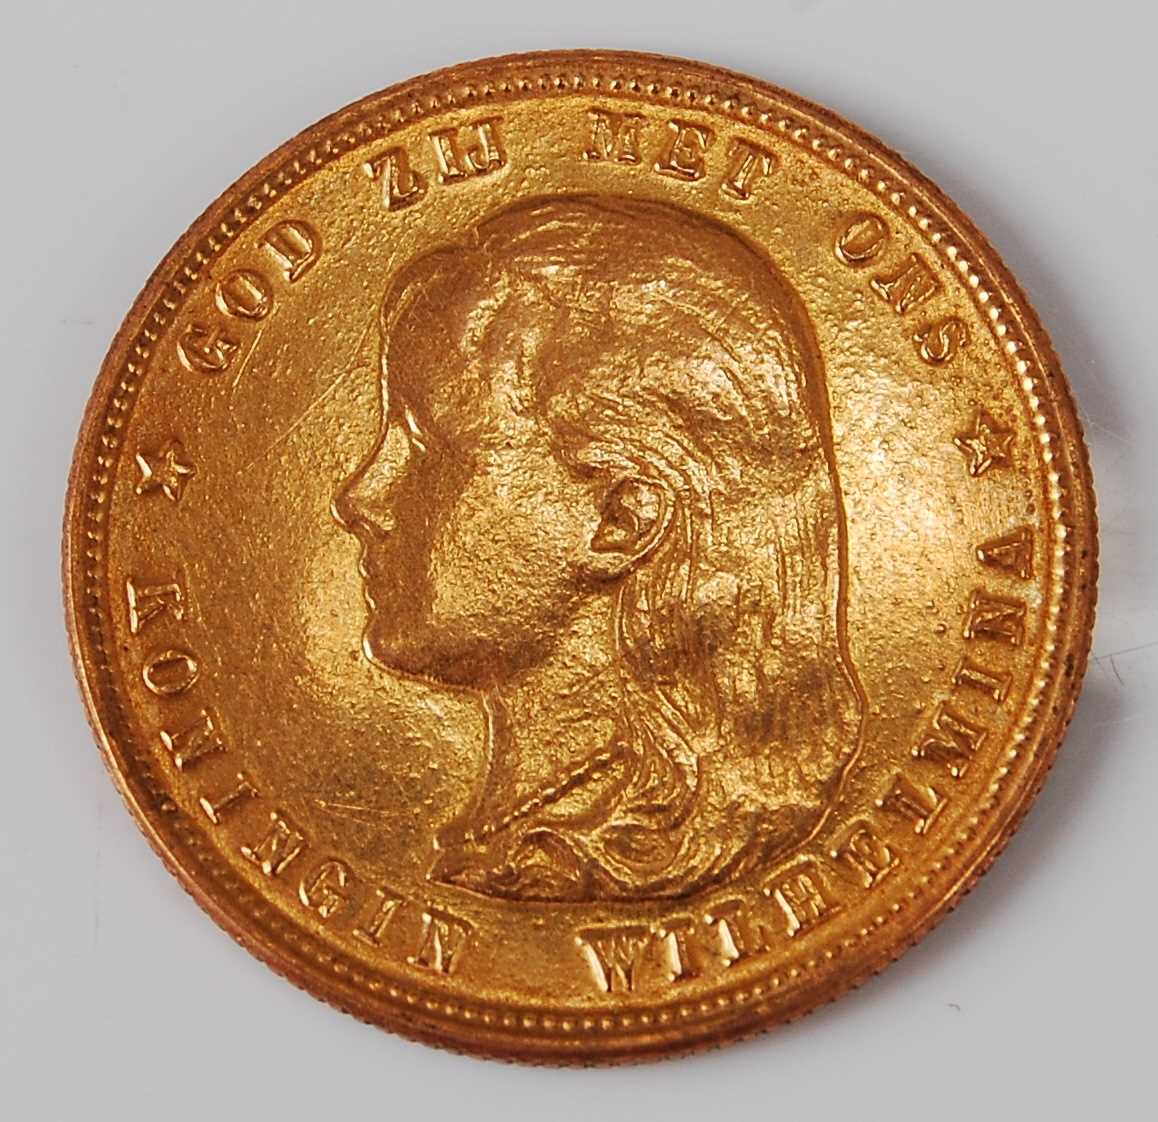 Lot 2094 - Netherlands, 1897 gold 10 gulden